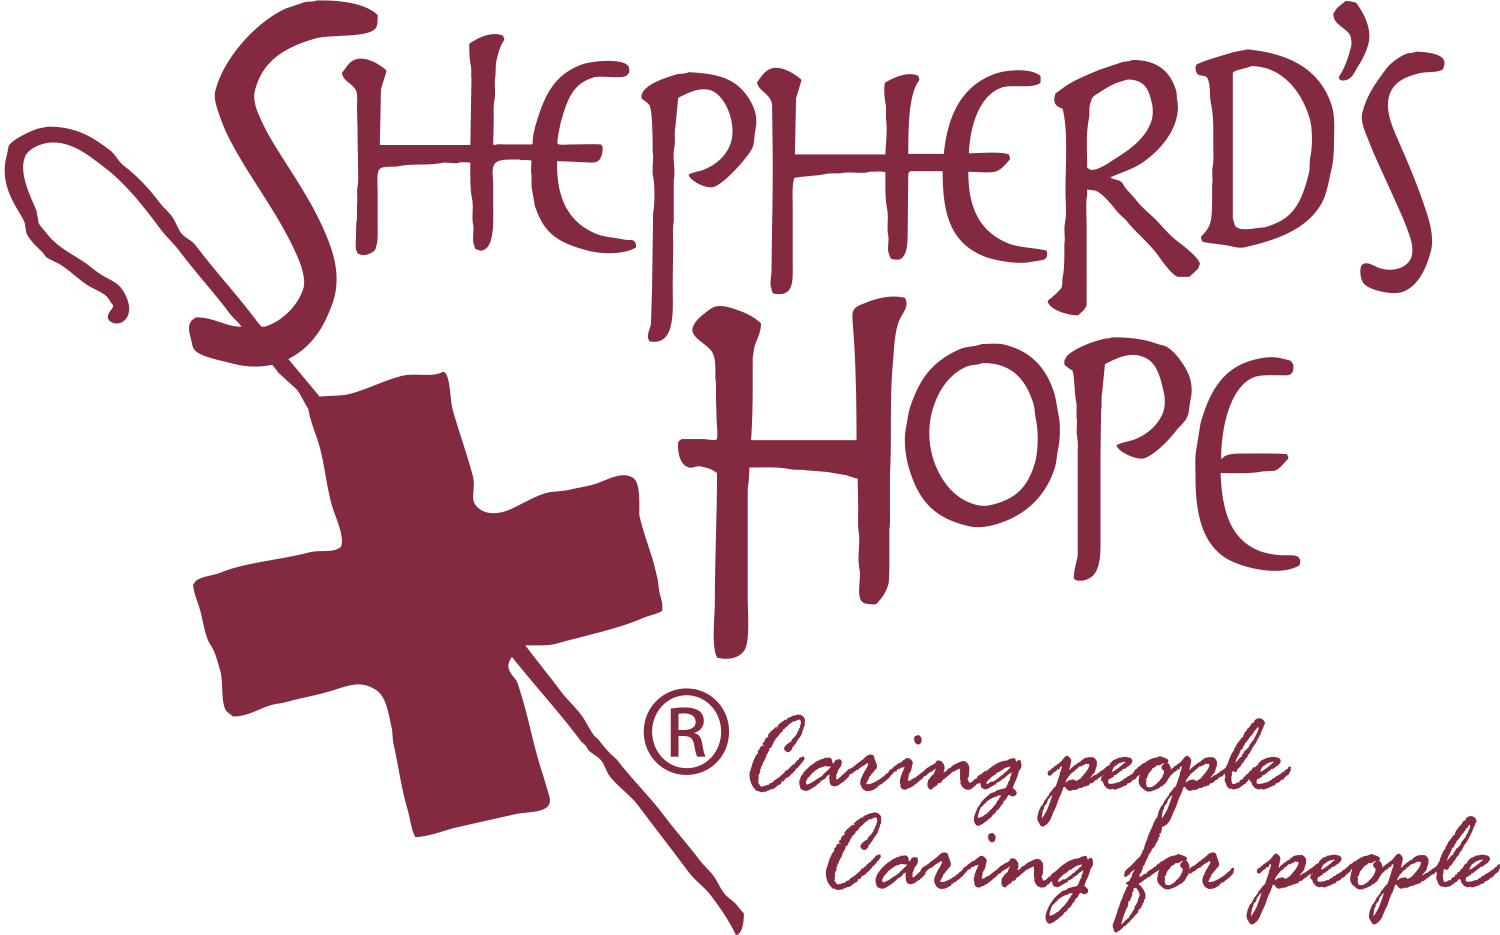 Shepherds Hope